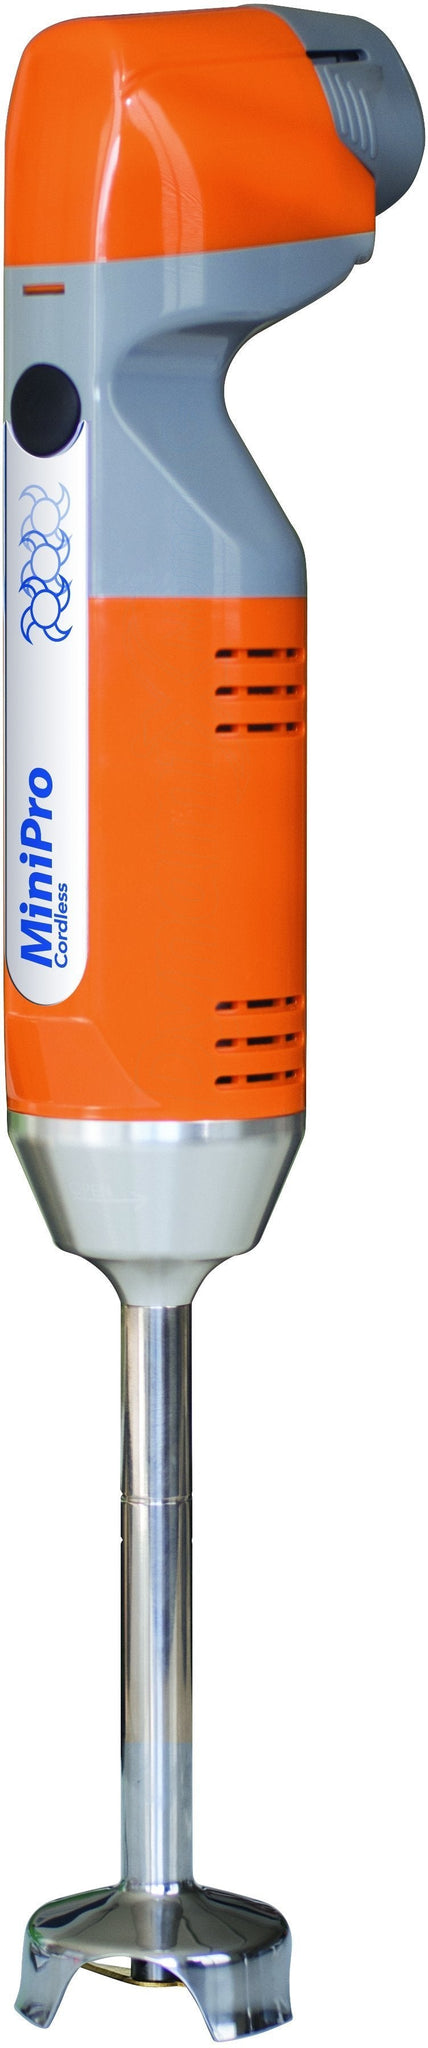 Dynamic - MiniPro Cordless Mixer 230V - MX135